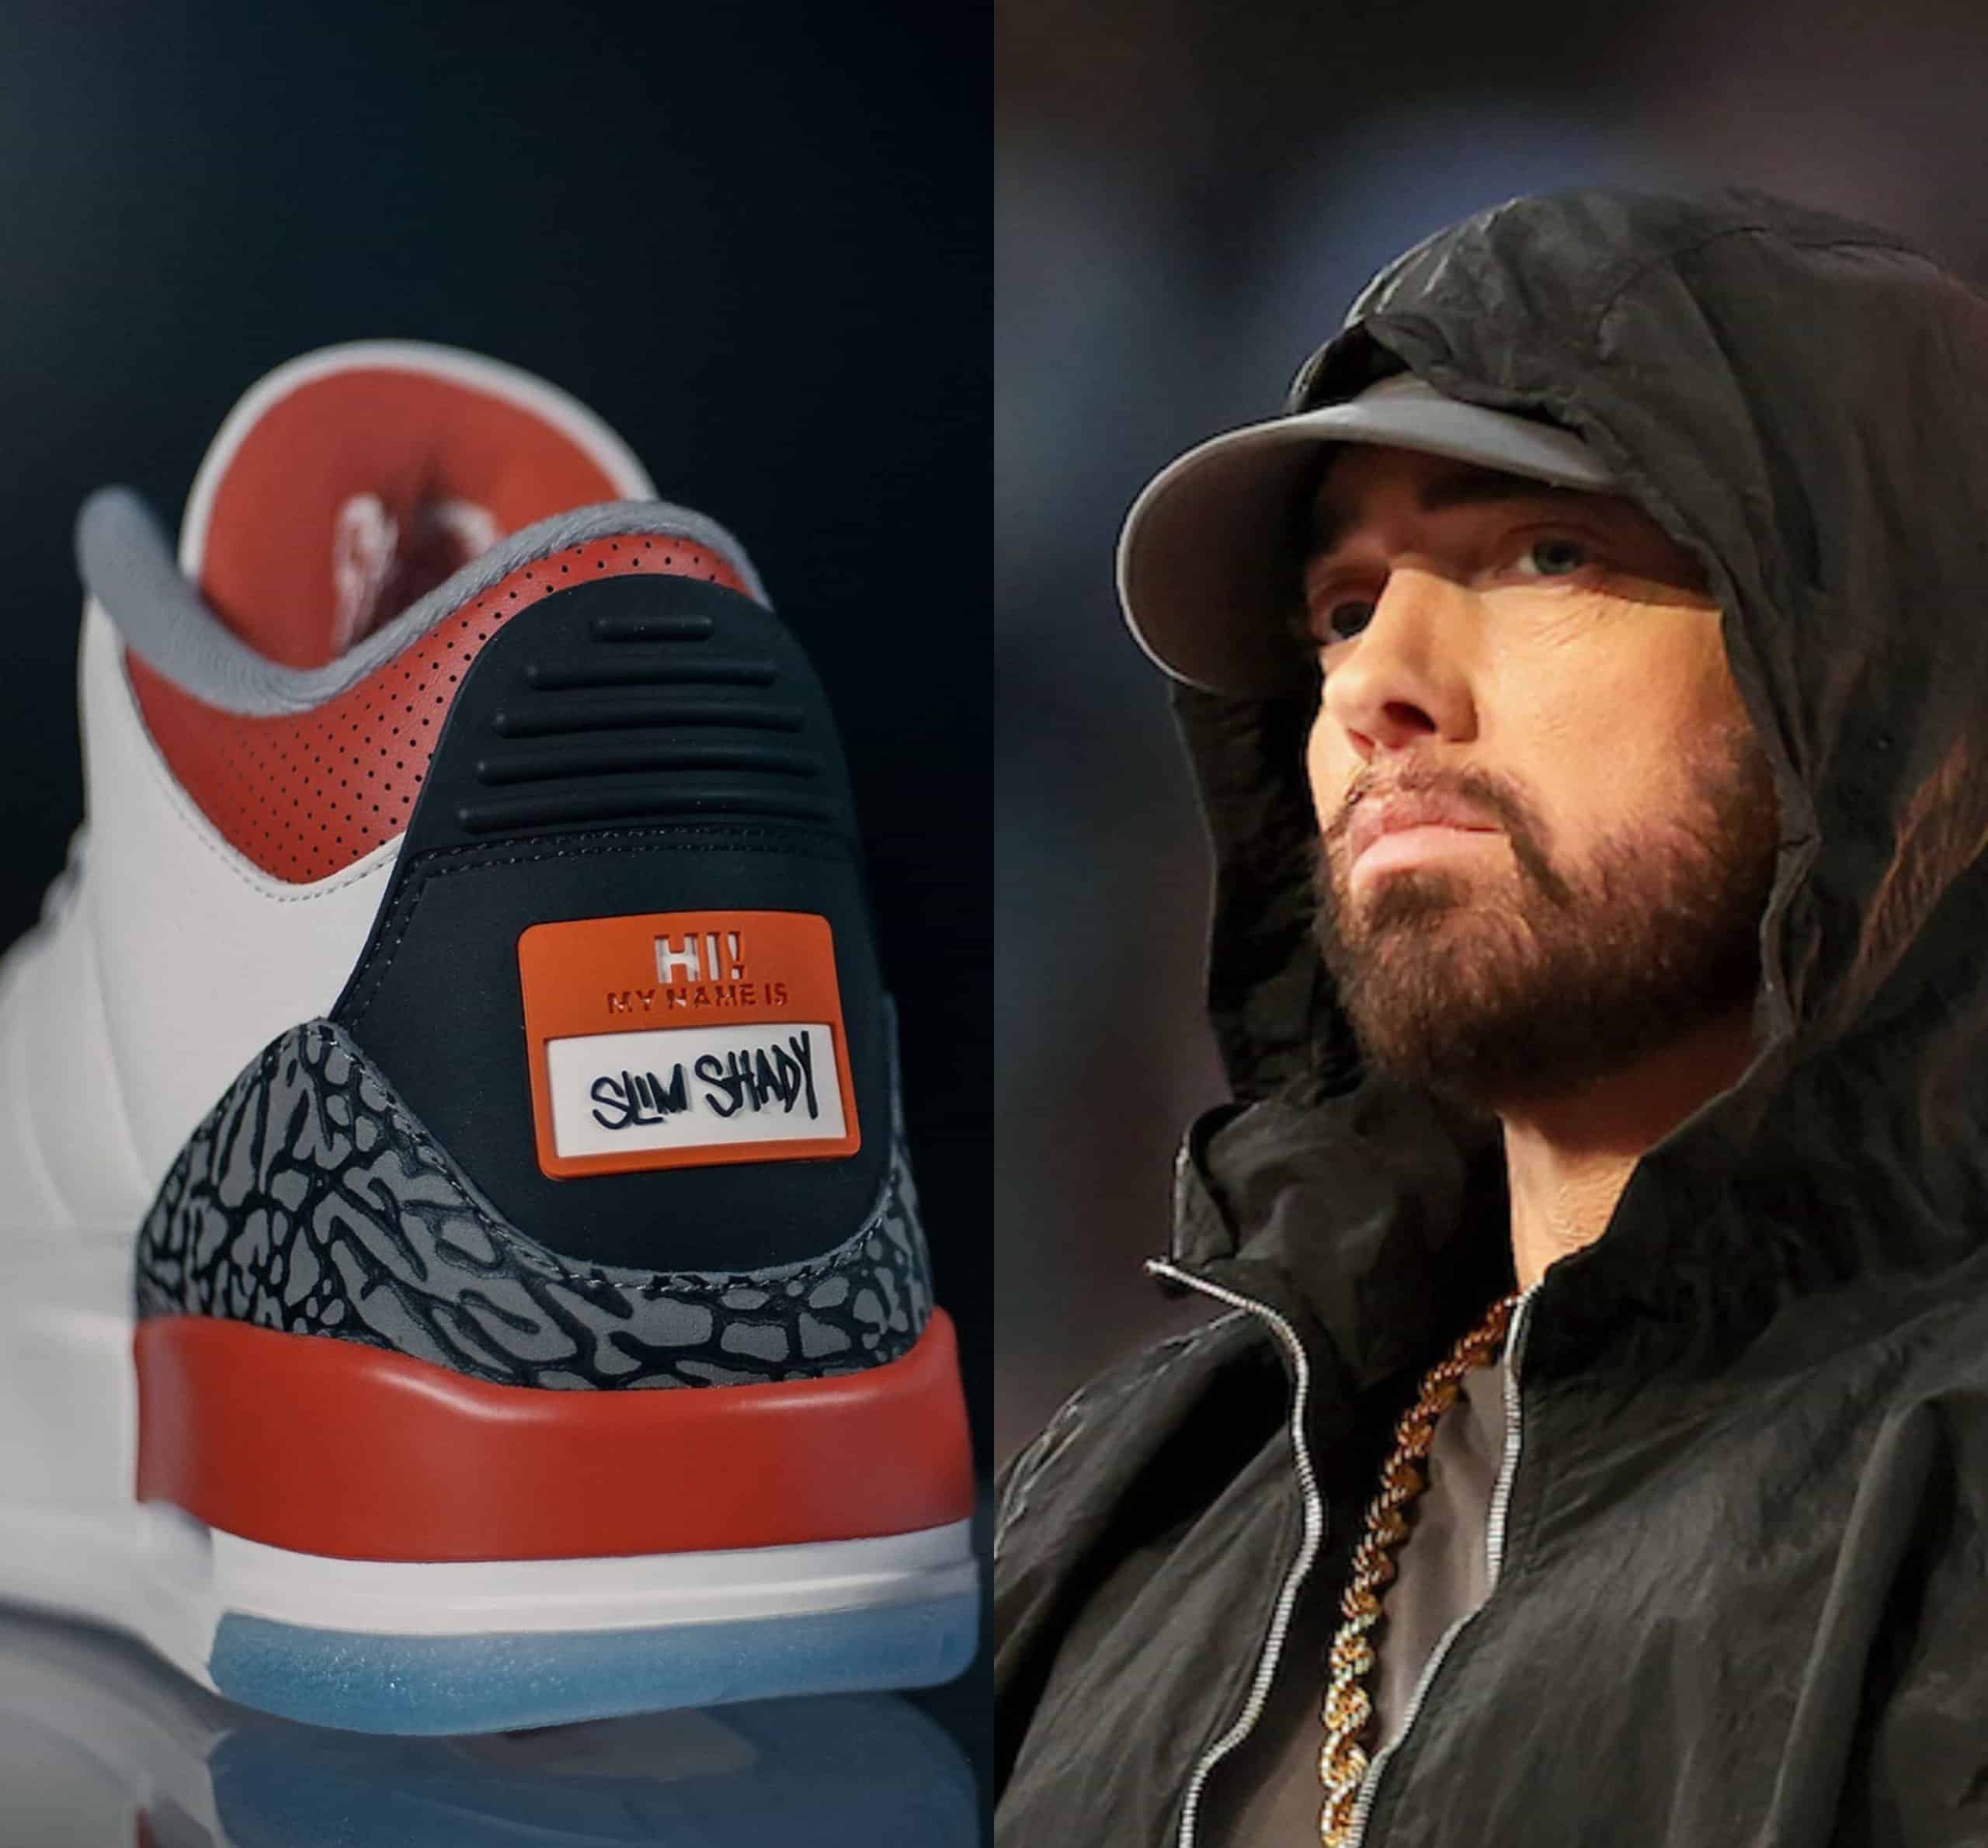 Eminem Rocks My Name Is Customized Air Jordan 3's At Super Bowl Show